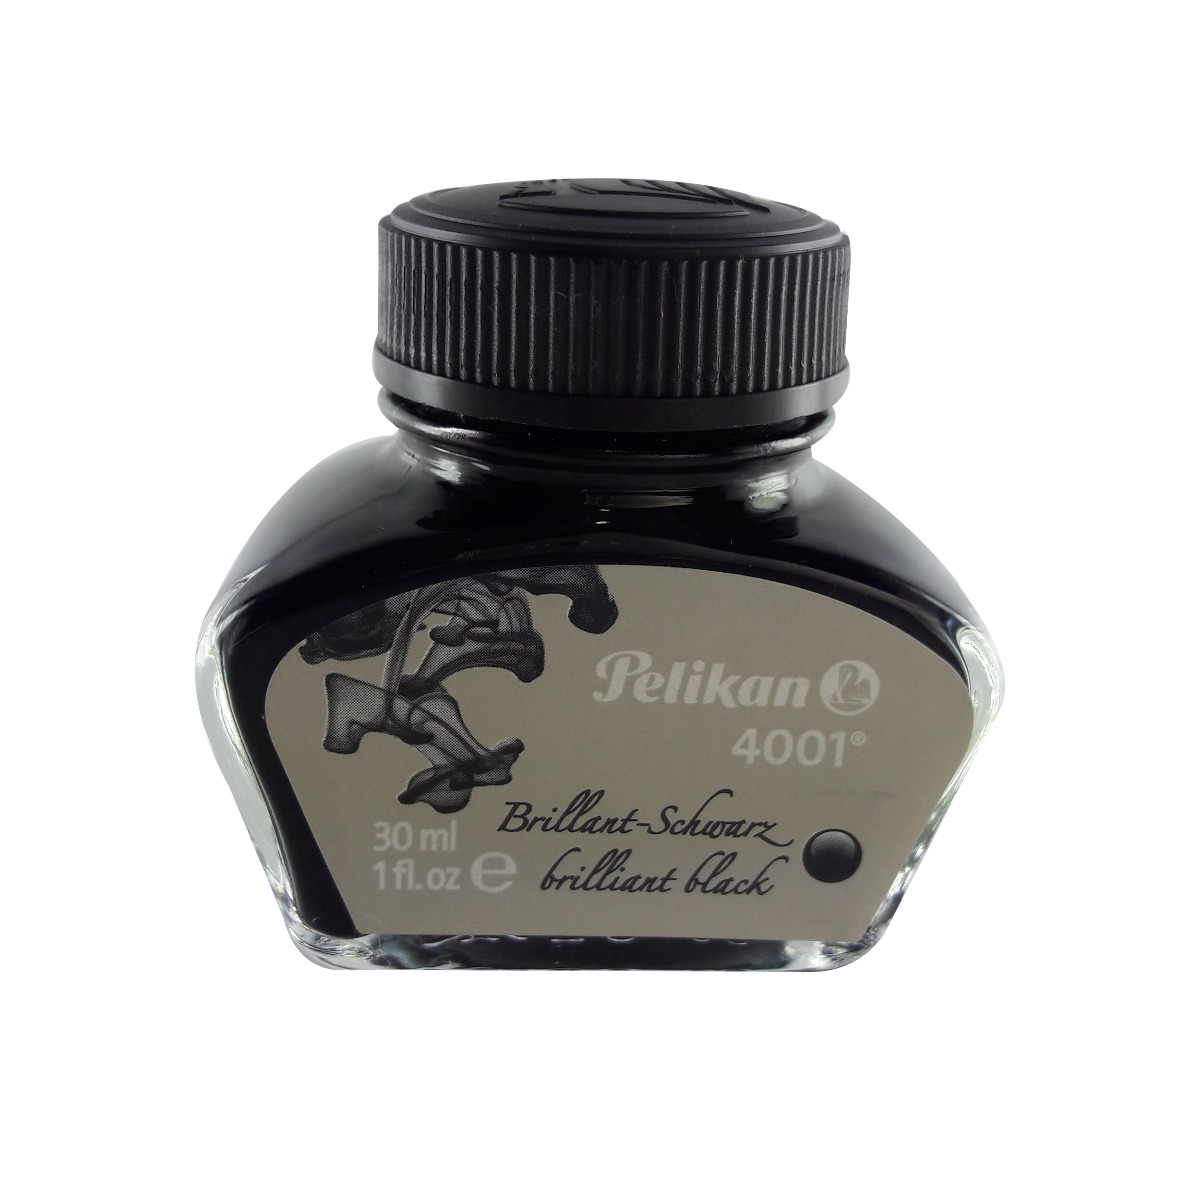 Pelikan Model: 70010 30 ml Brilliant Black color ink bottle